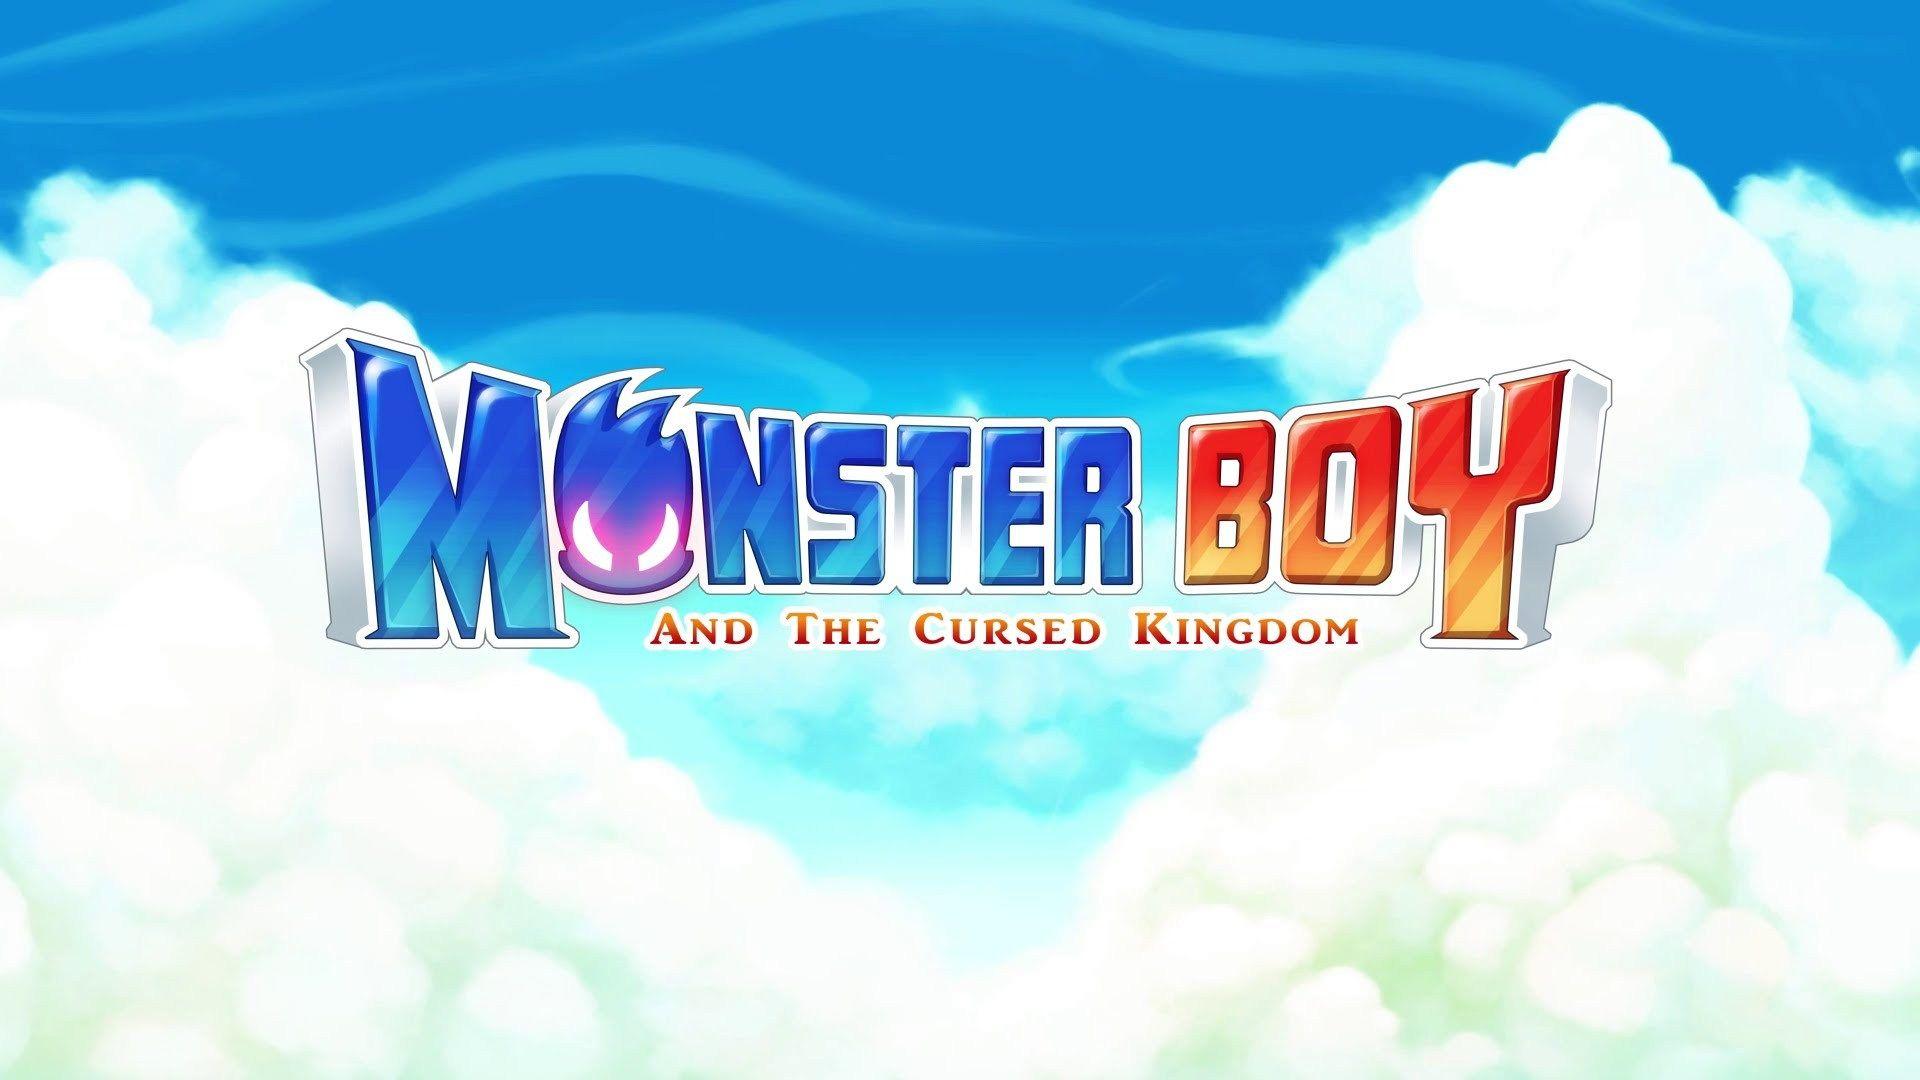 New Monster Boy gameplay trailer released